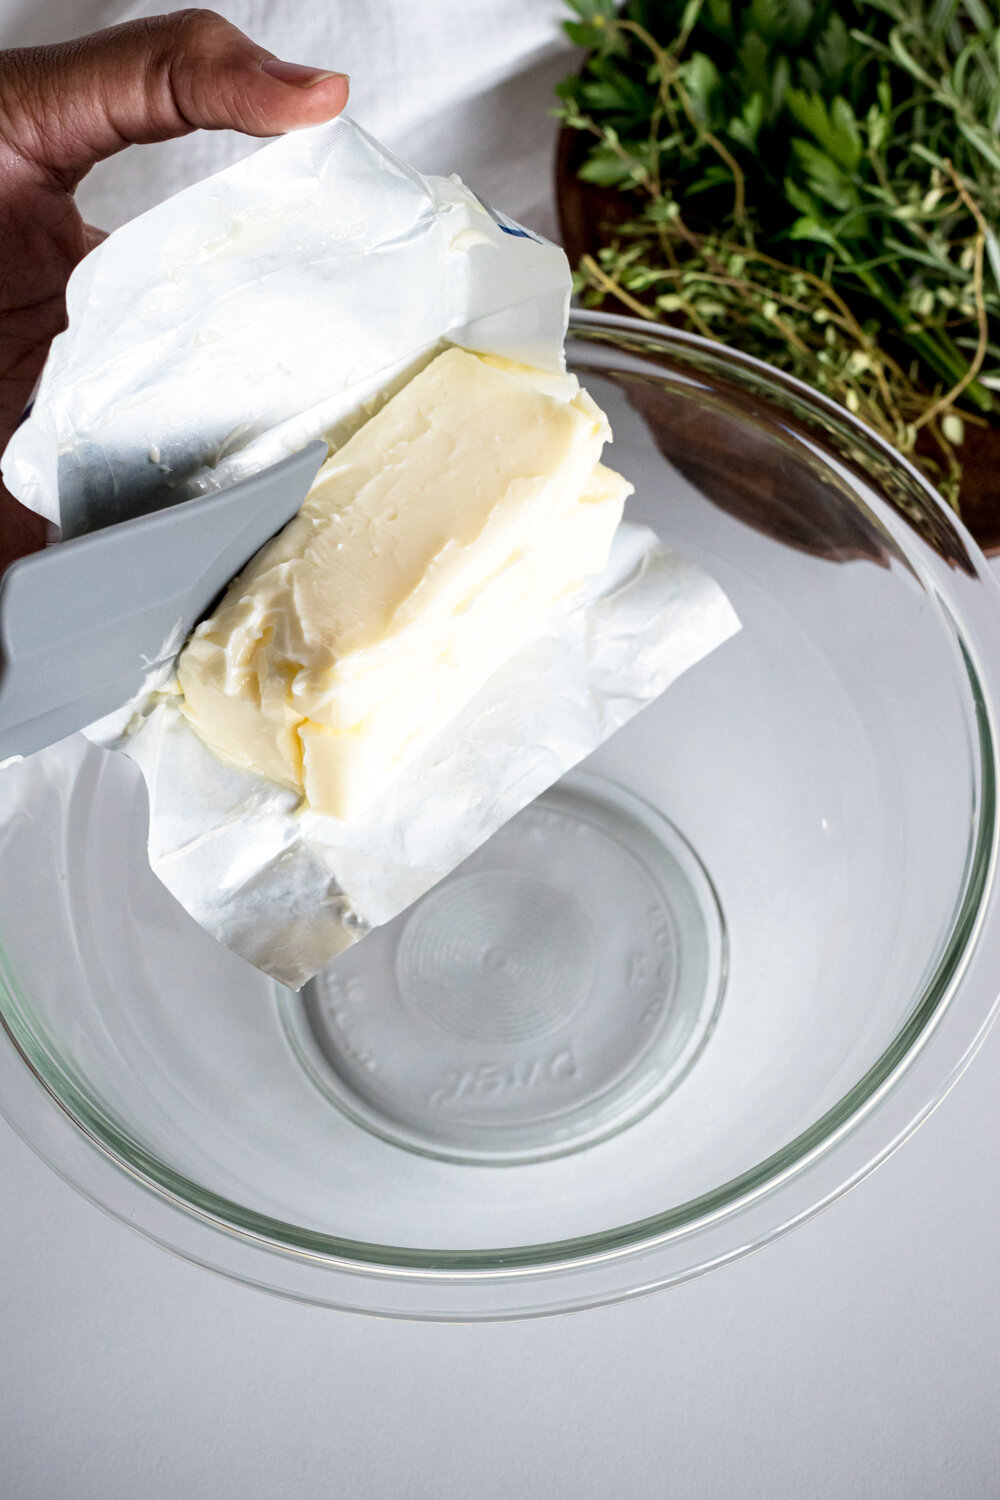 Summer Herb Compound Butter with Garlic & Lemon Zest-6.jpg